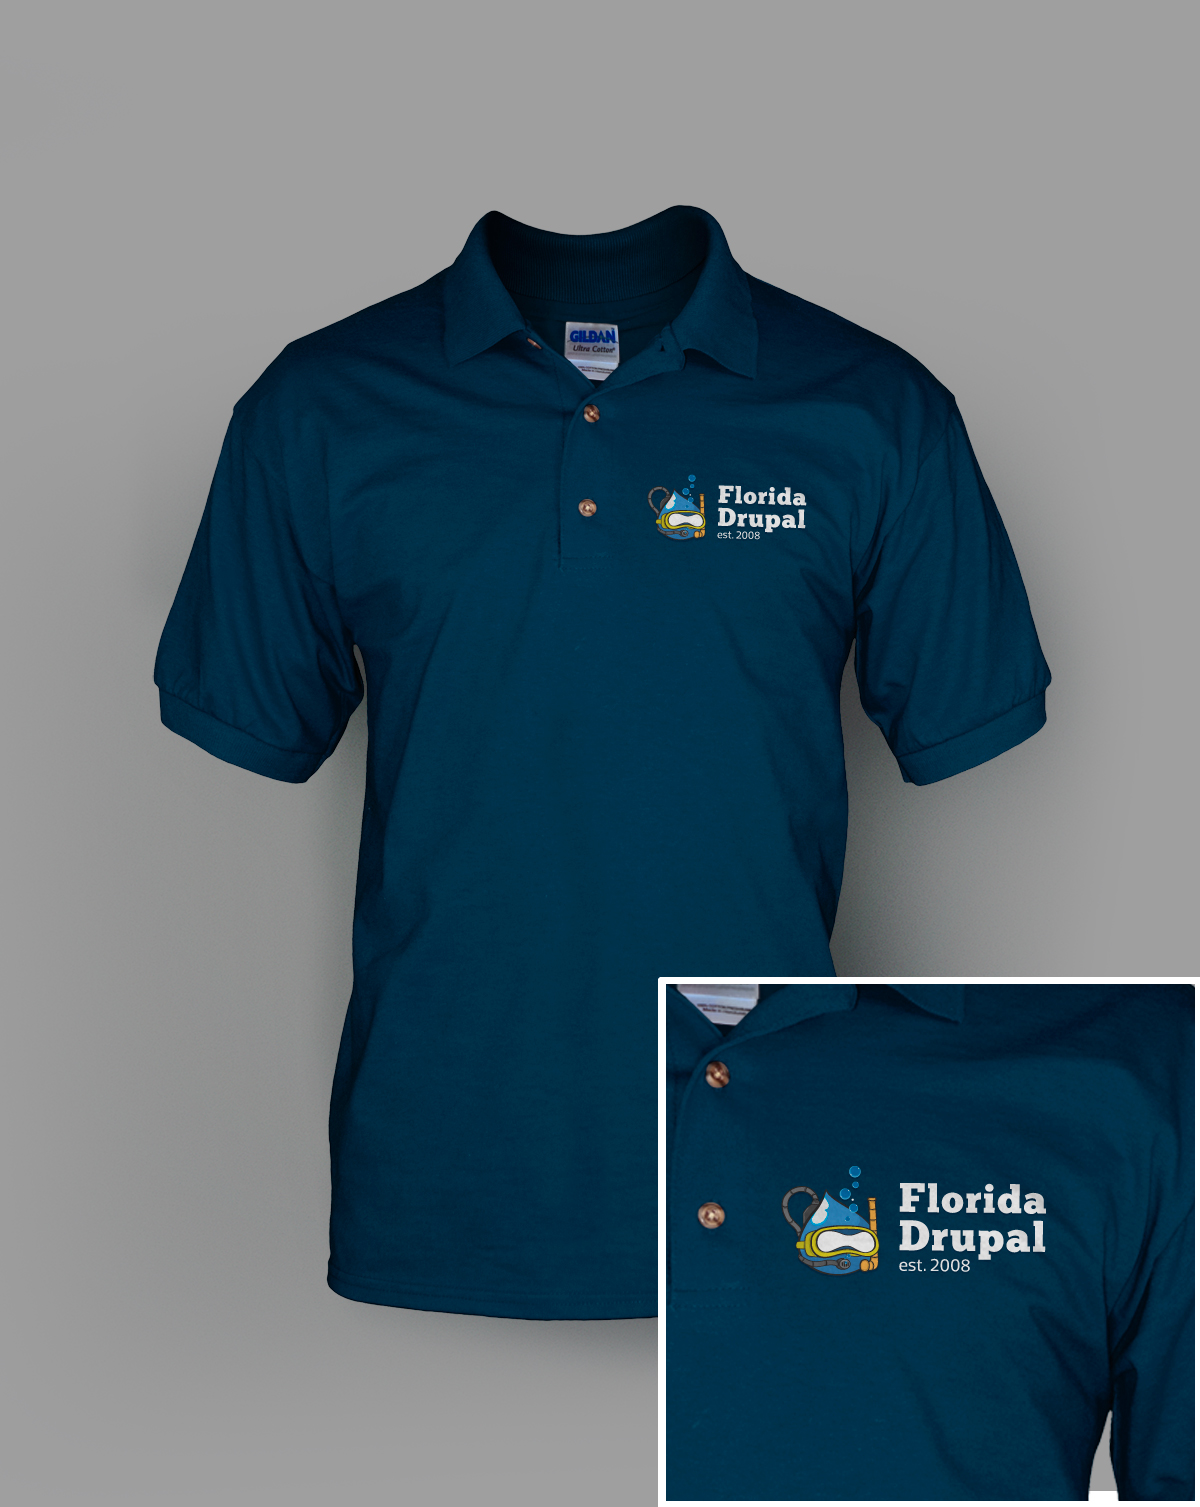 Florida Drupal Polo Shirt